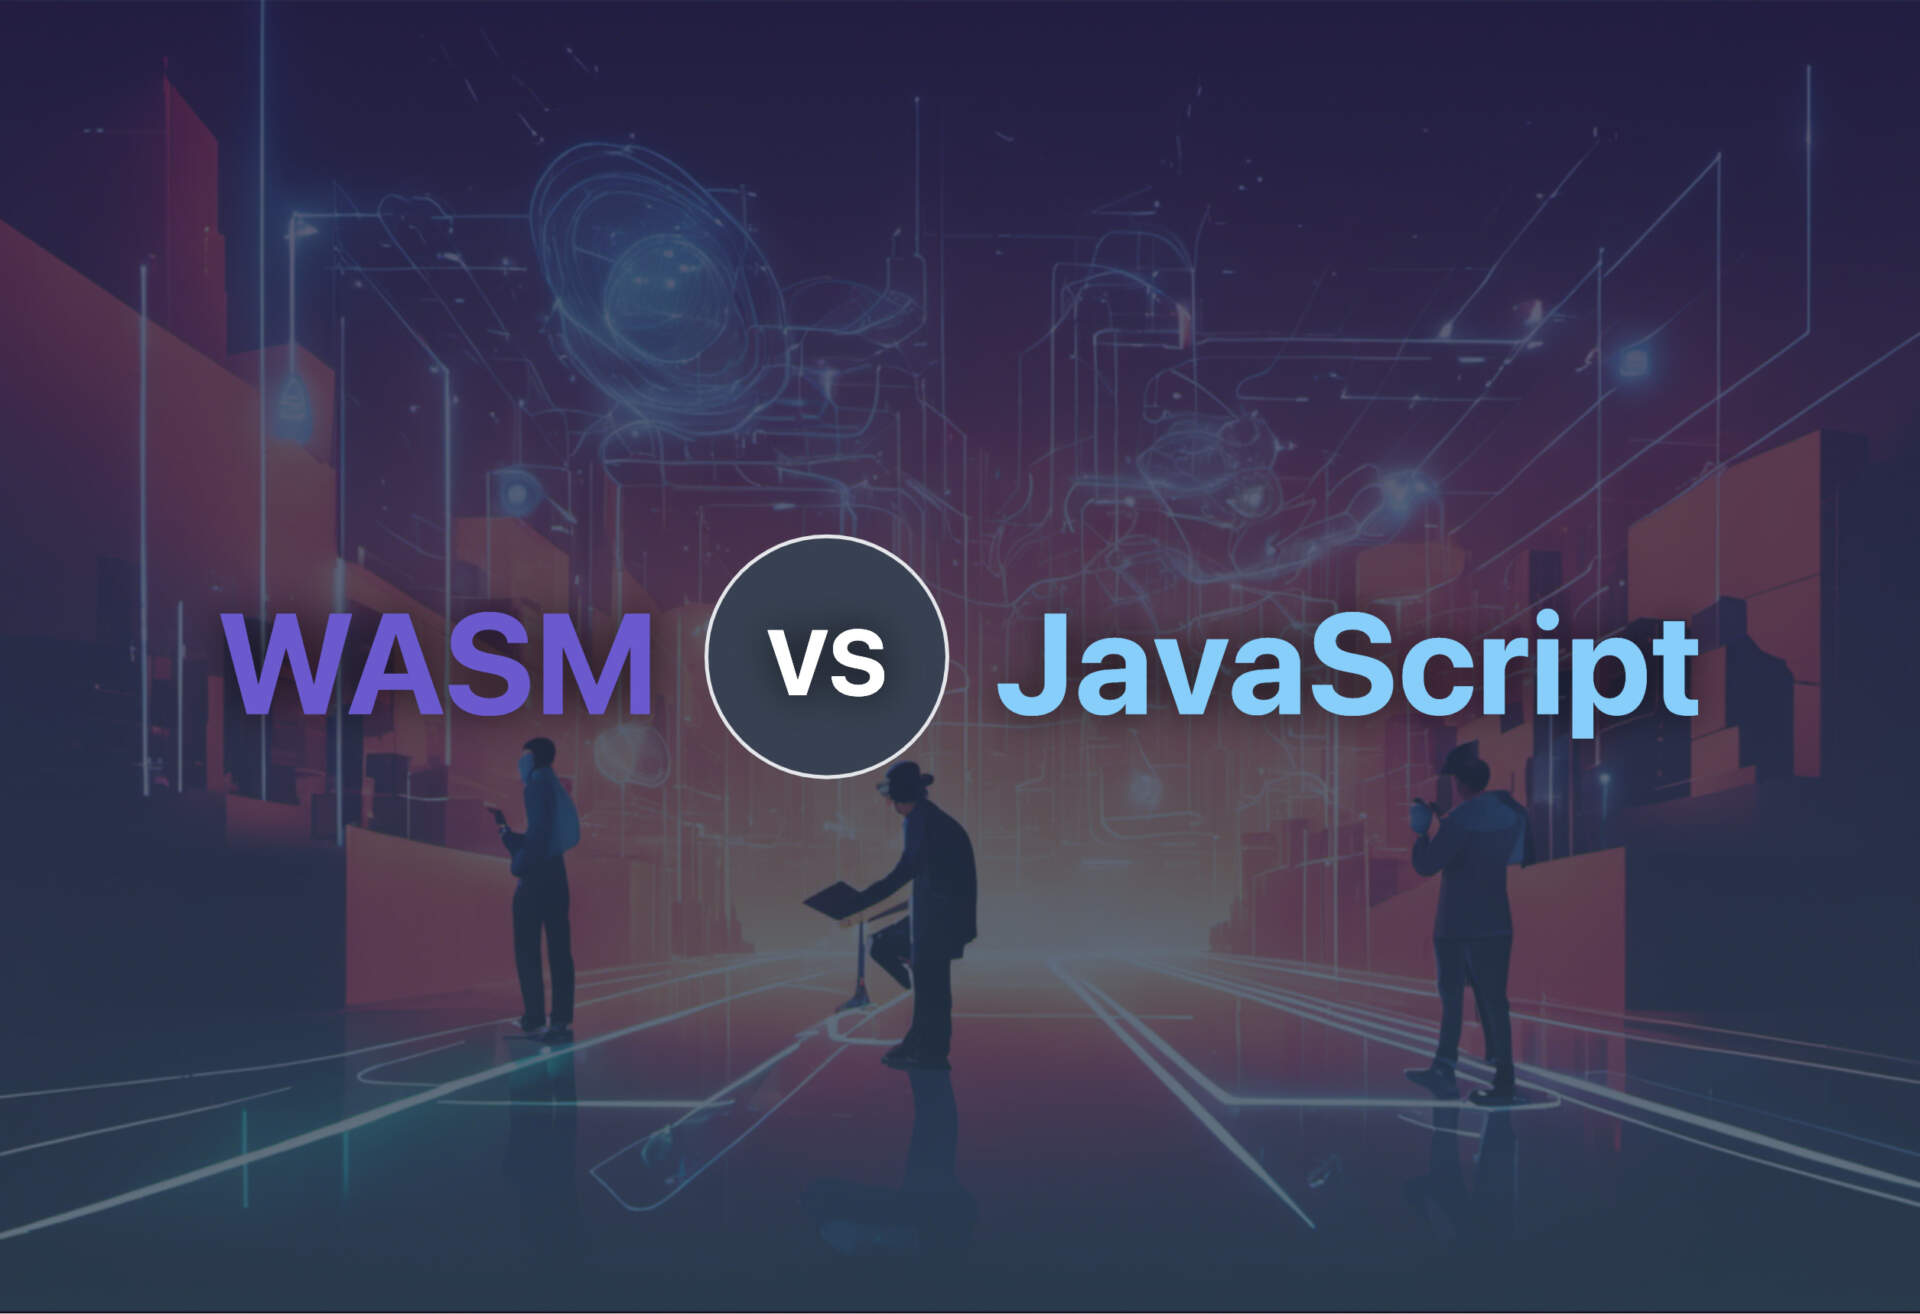 WASM vs JavaScript comparison